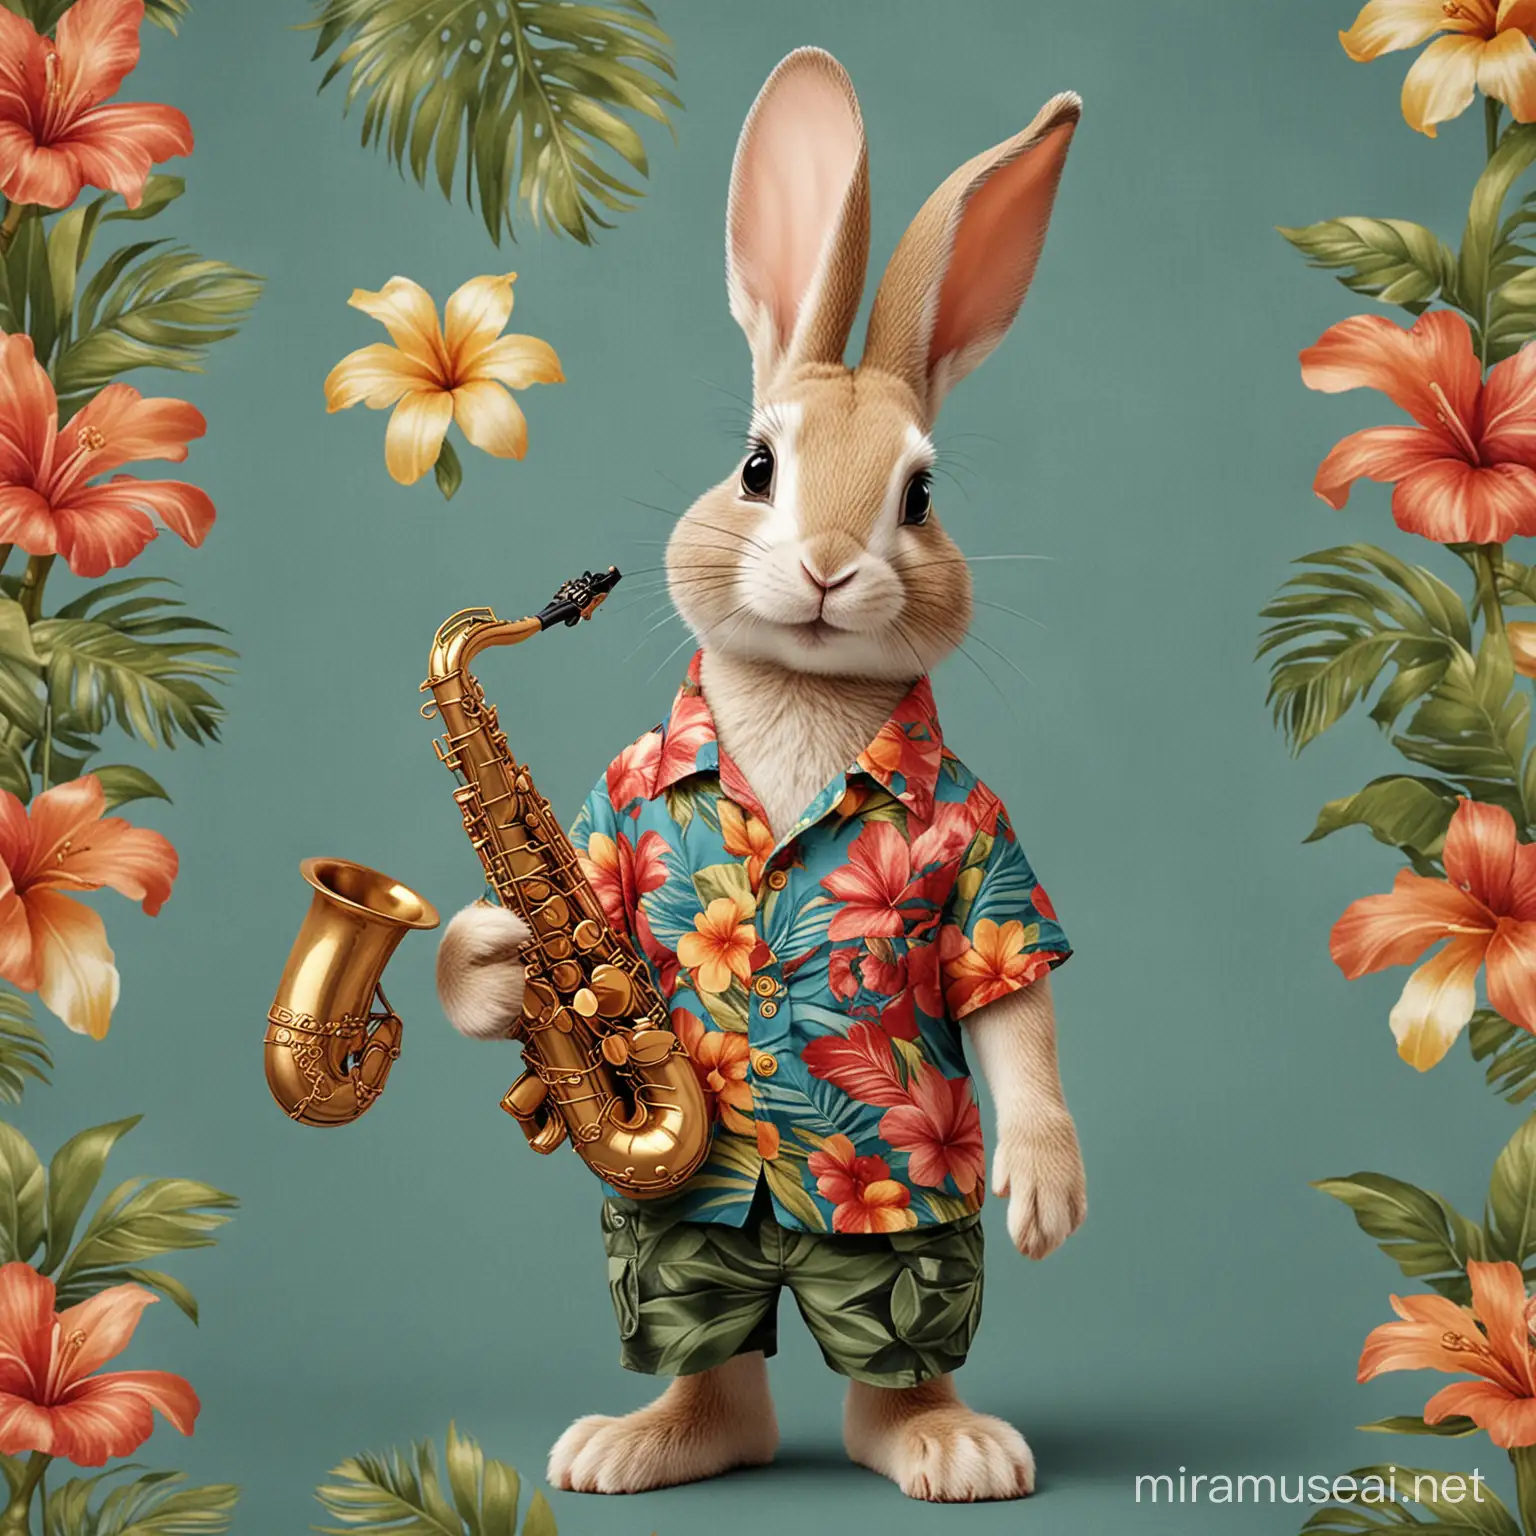 SaxophonePlaying Rabbit in Colorful Hawaiian Shirt